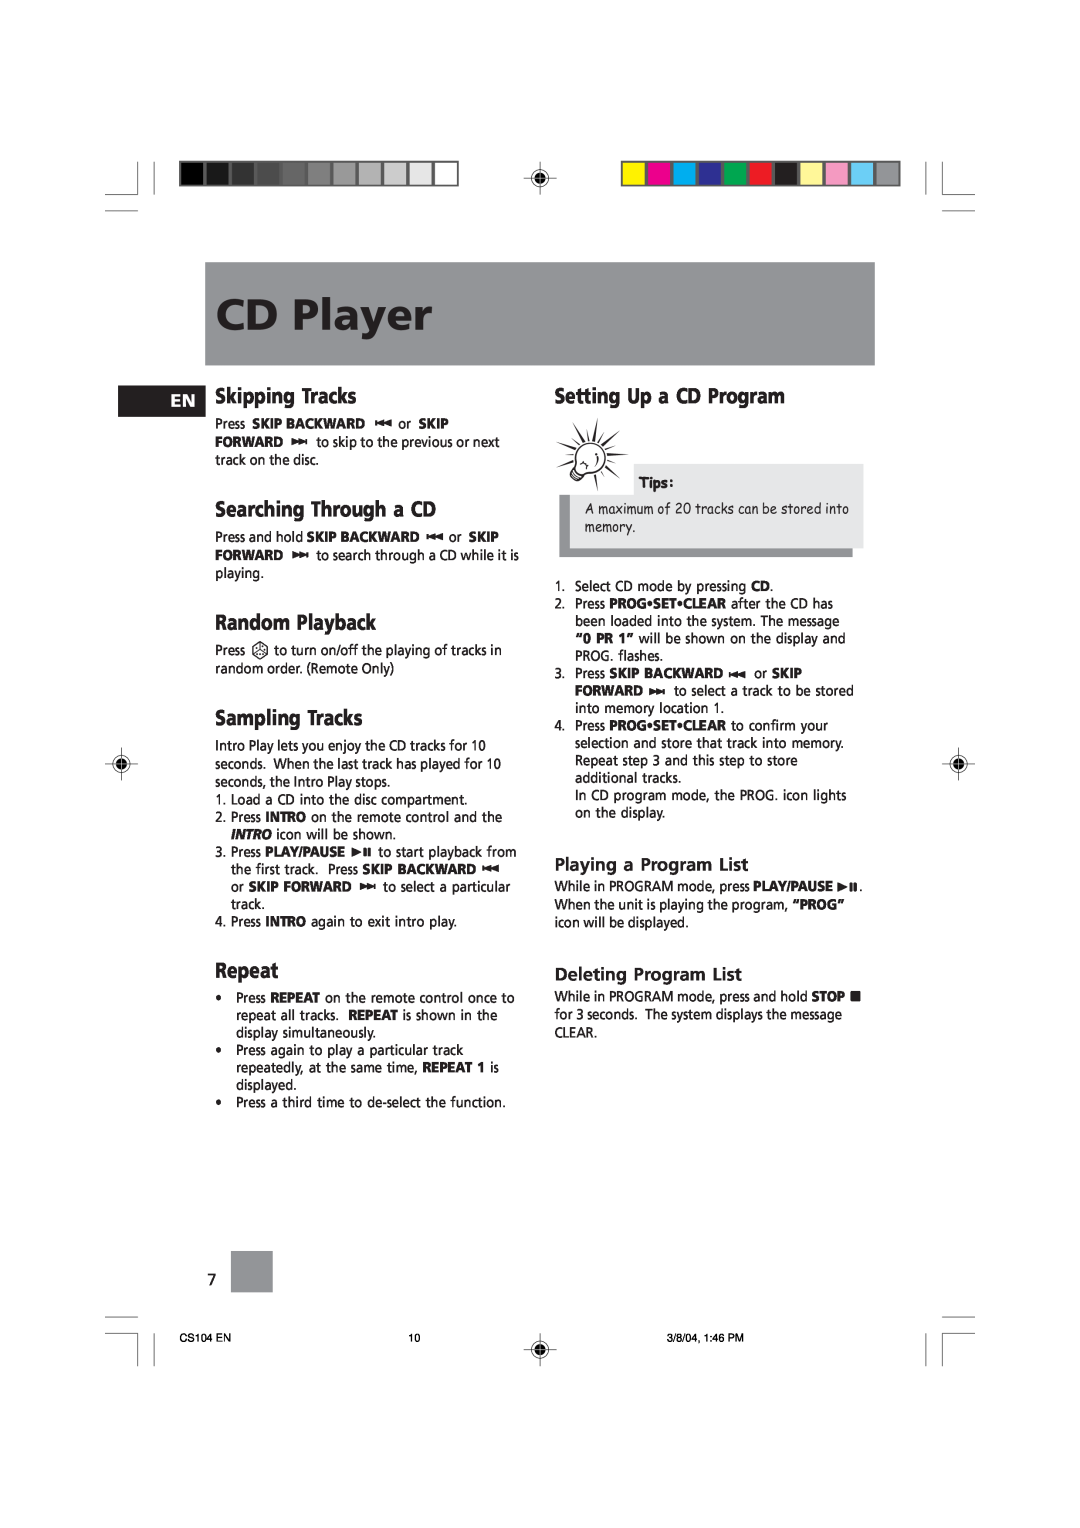 Technicolor - Thomson CS104 Skipping Tracks, Searching Through a CD, Random Playback, Sampling Tracks, Repeat, CD Player 